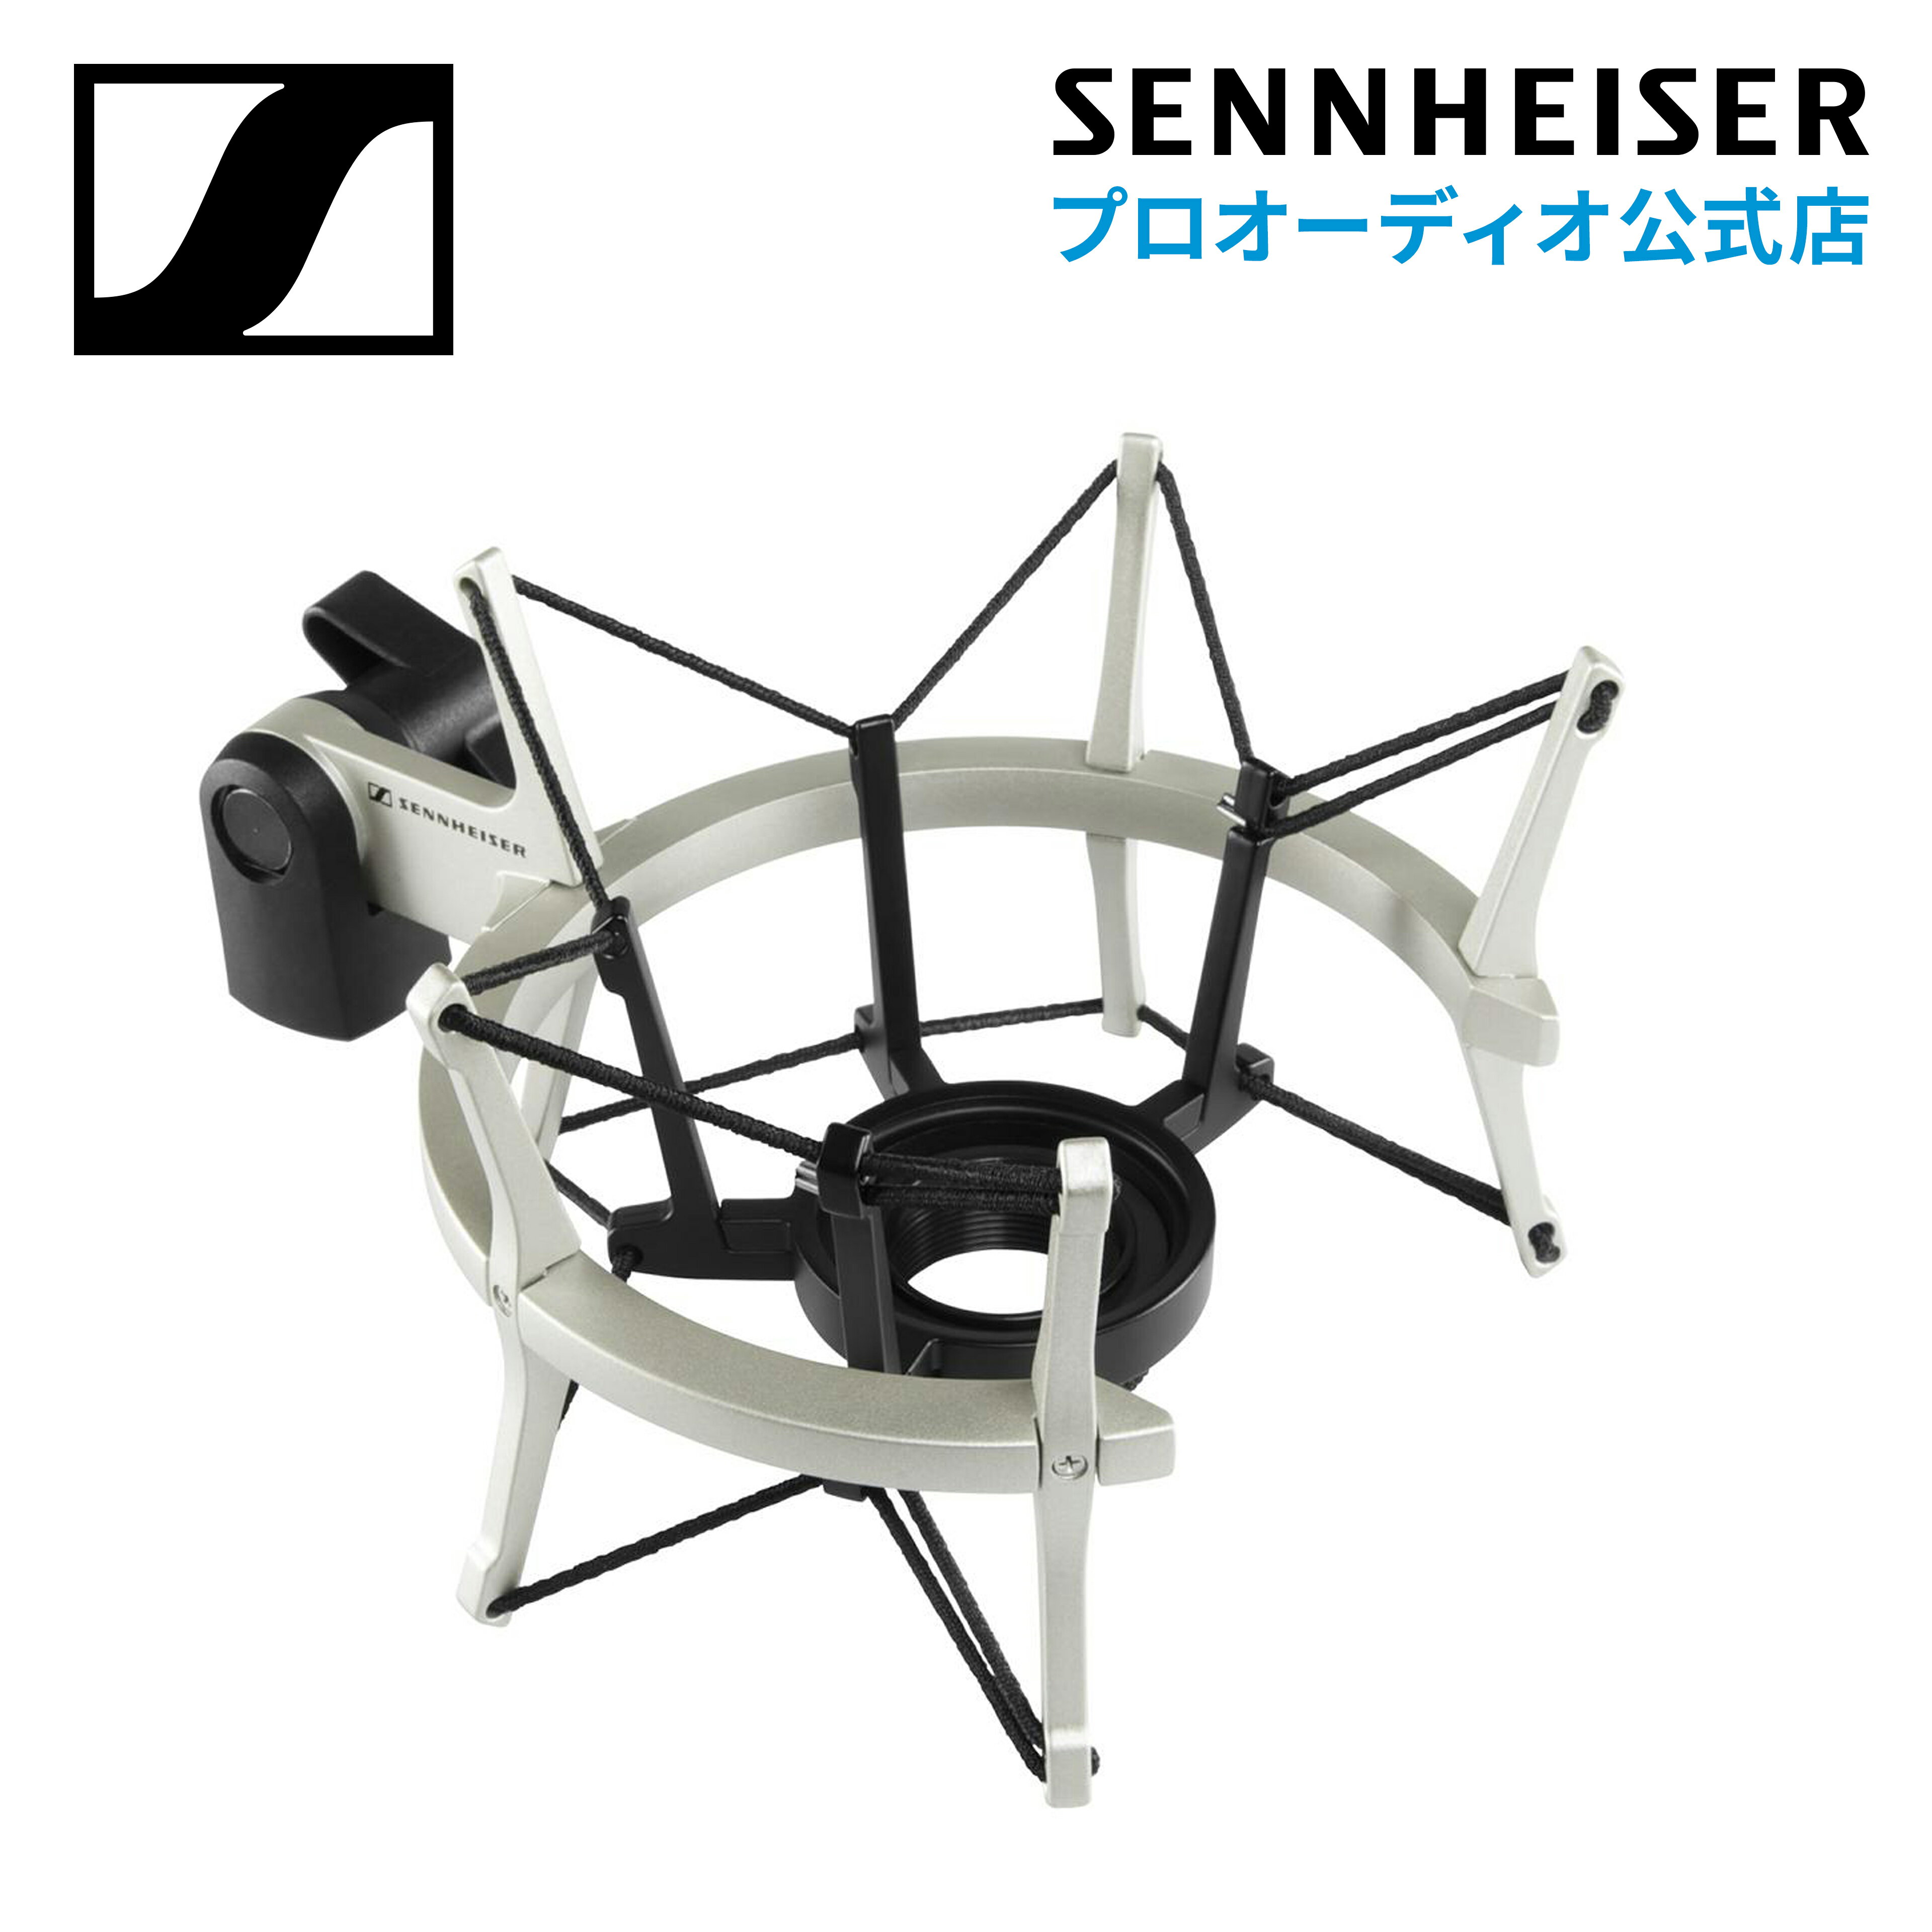 Sennheiser ゼンハイザー MKS 4 オープンリング付き エラスティックサスペンション  504299 メーカー保証2年 送料無料 振動防止